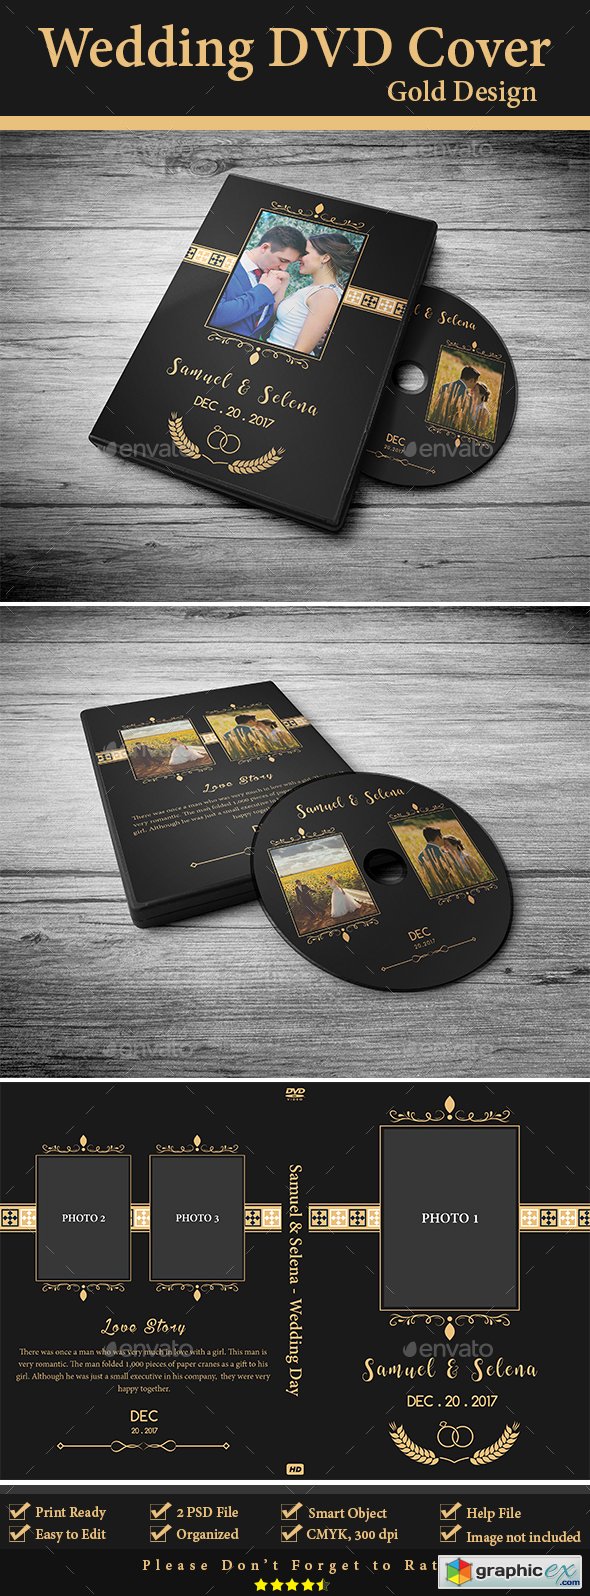 Wedding DVD Cover - Gold Design